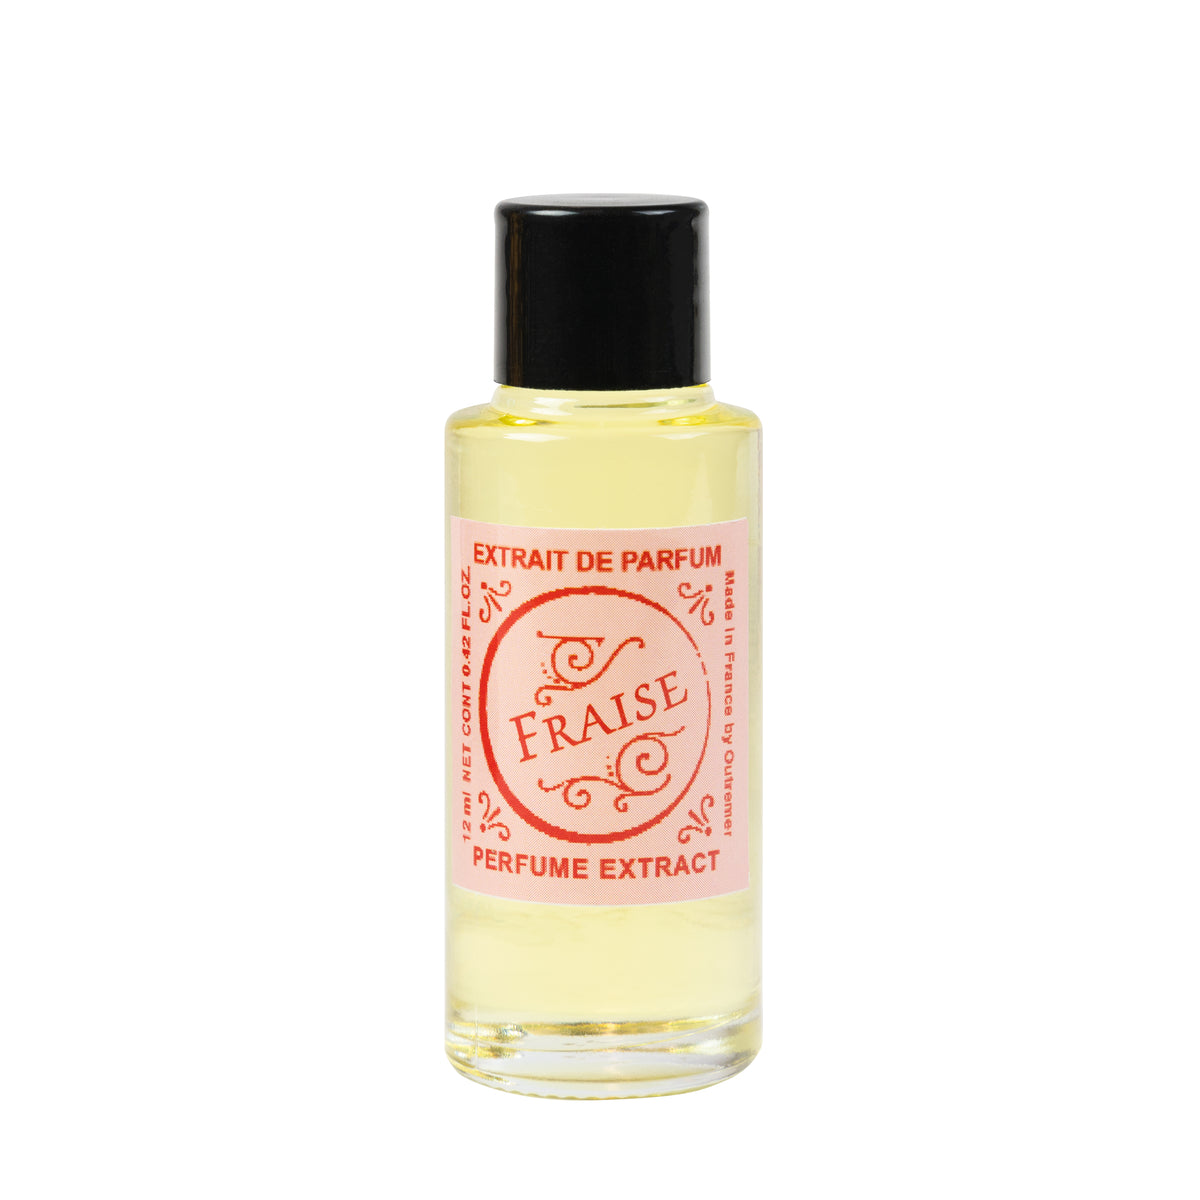 Fraise Perfume Extract